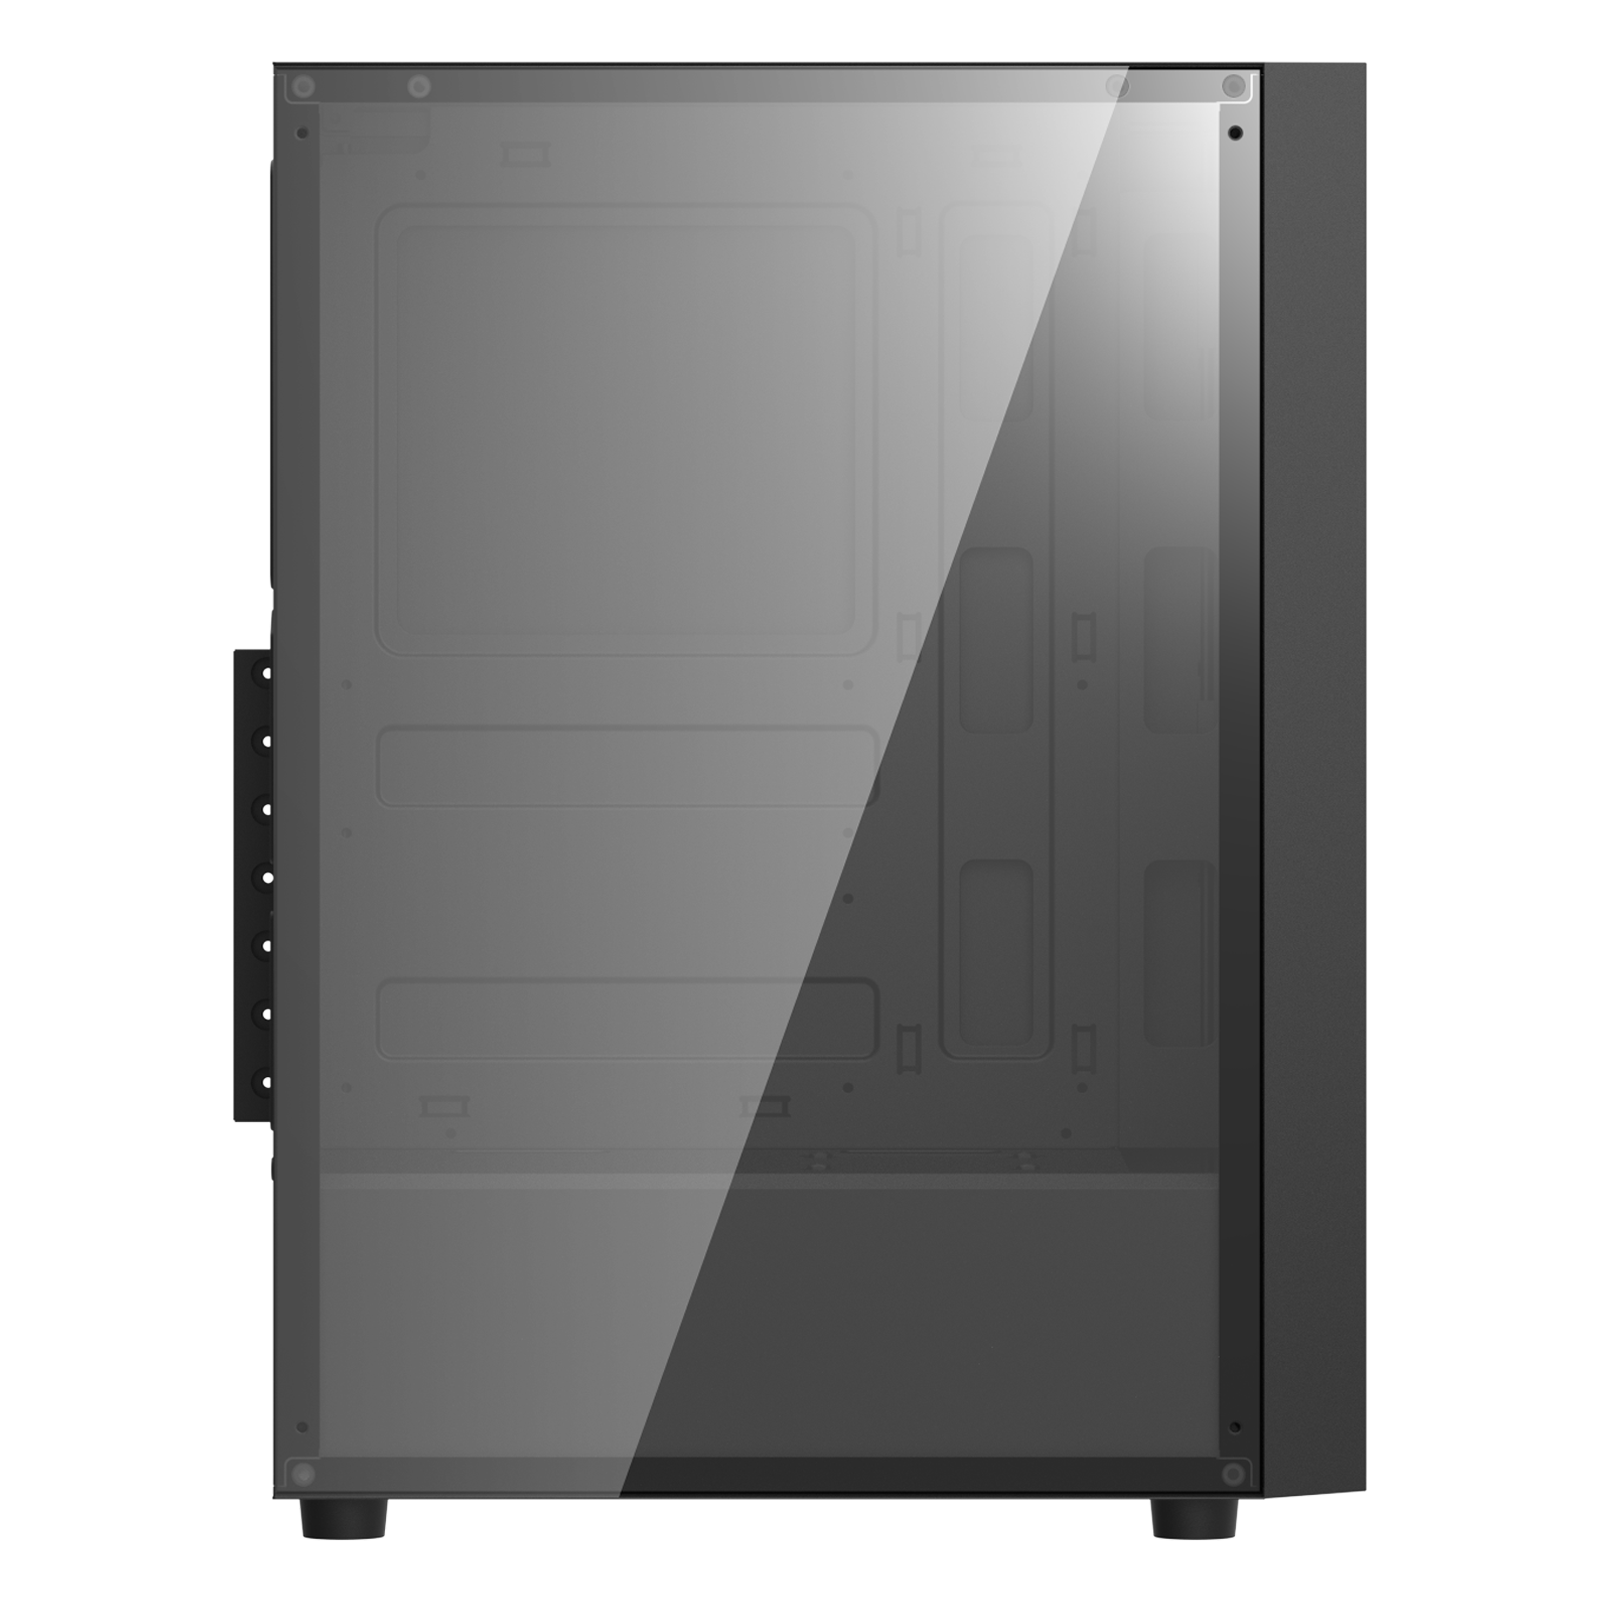 Vỏ case máy tính DarkFlash A290 (Mid Tower/ Đen)